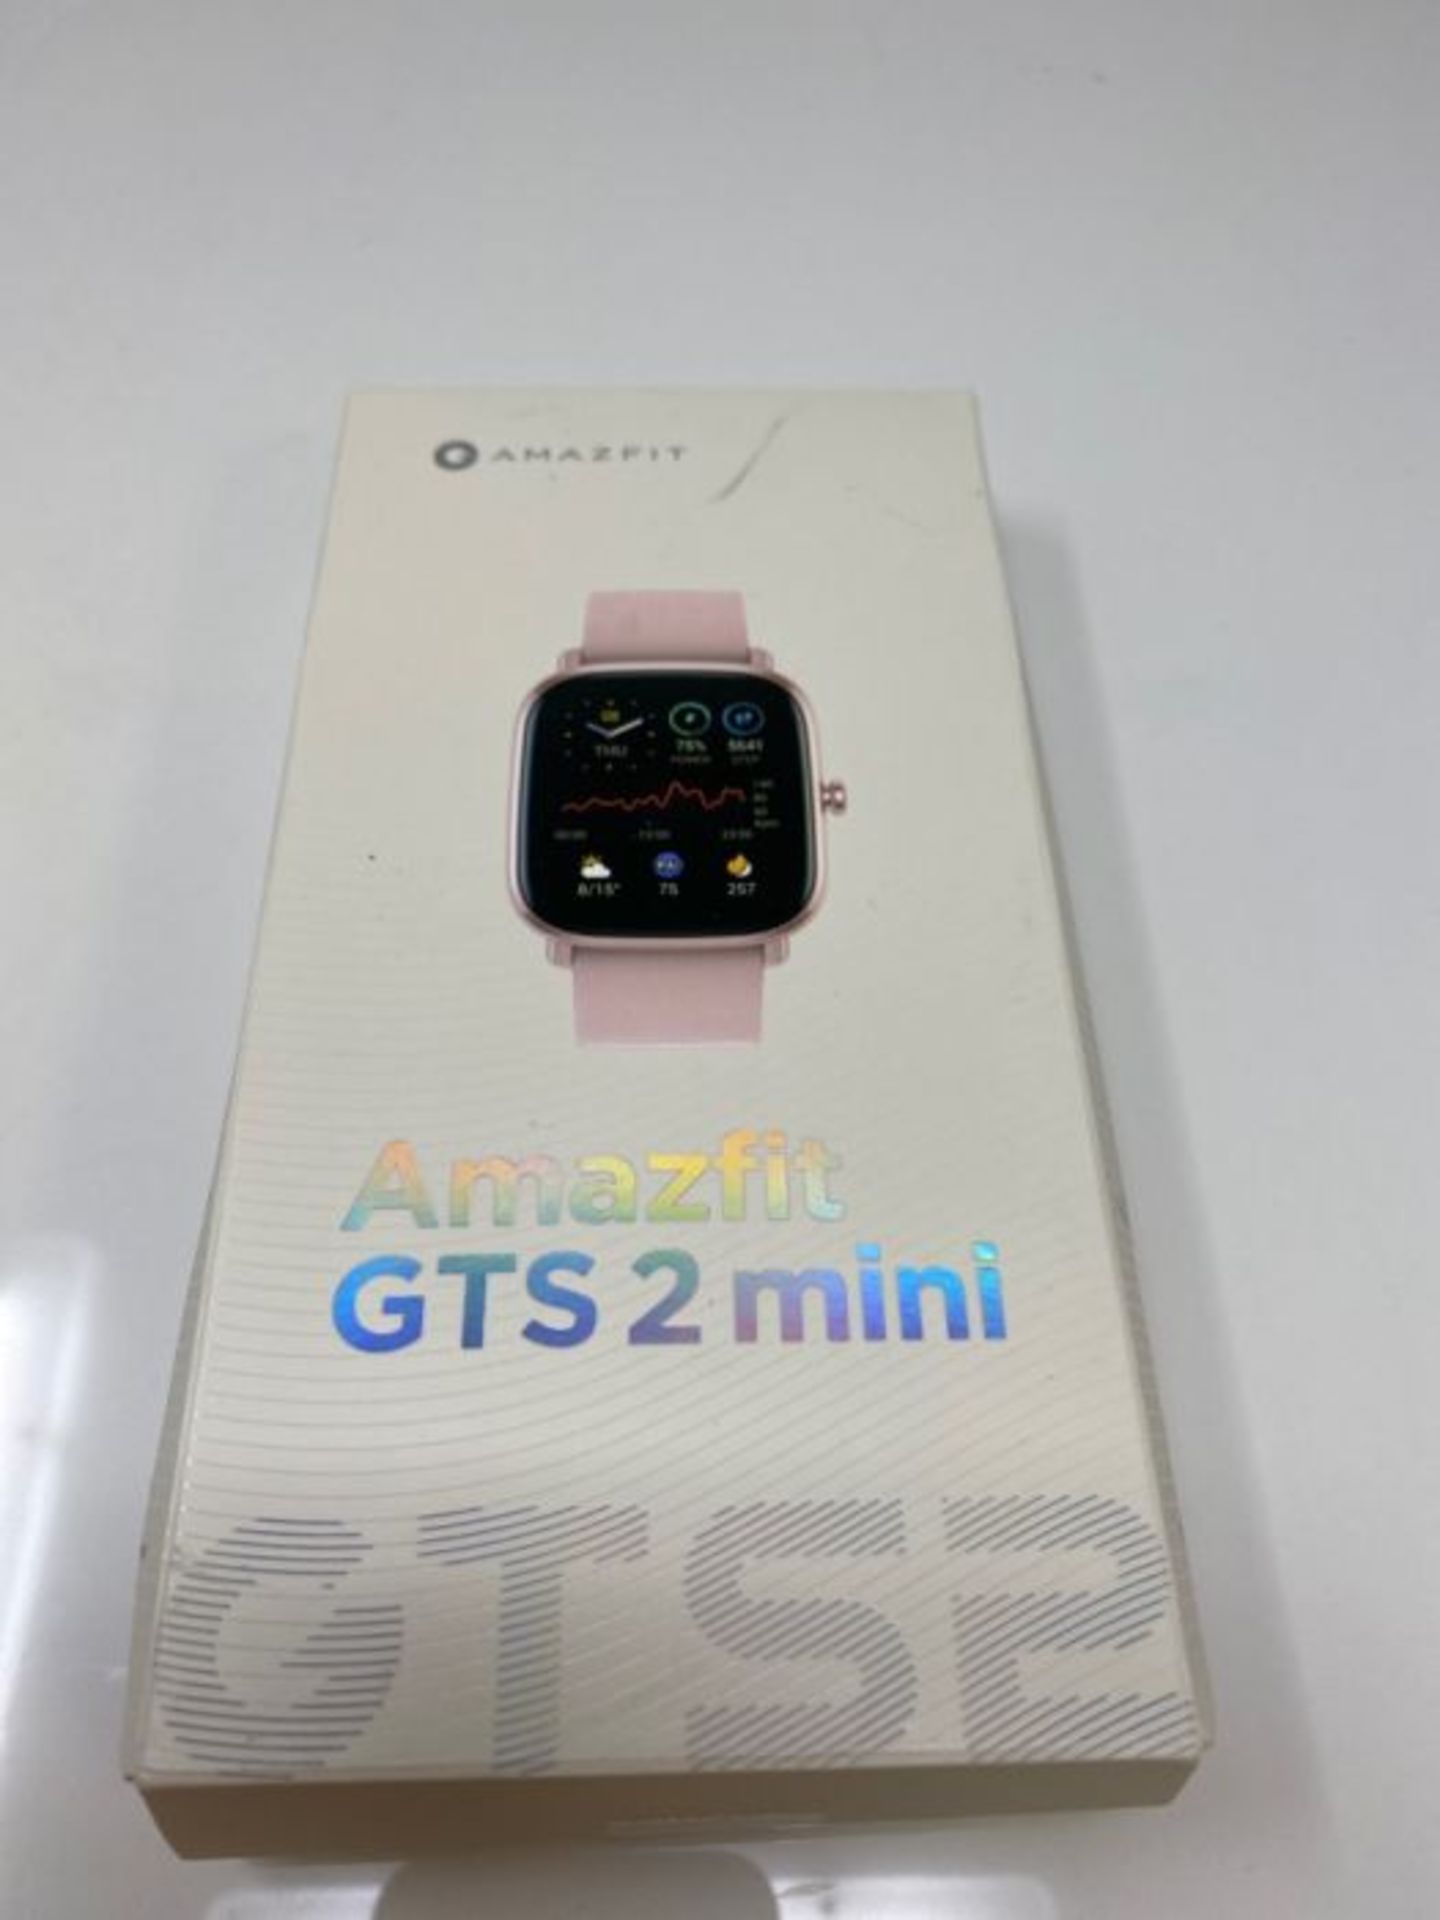 RRP £60.00 Amazfit Unisex's GTS 2 Mini Pink Smartwatch, One Size - Image 2 of 3